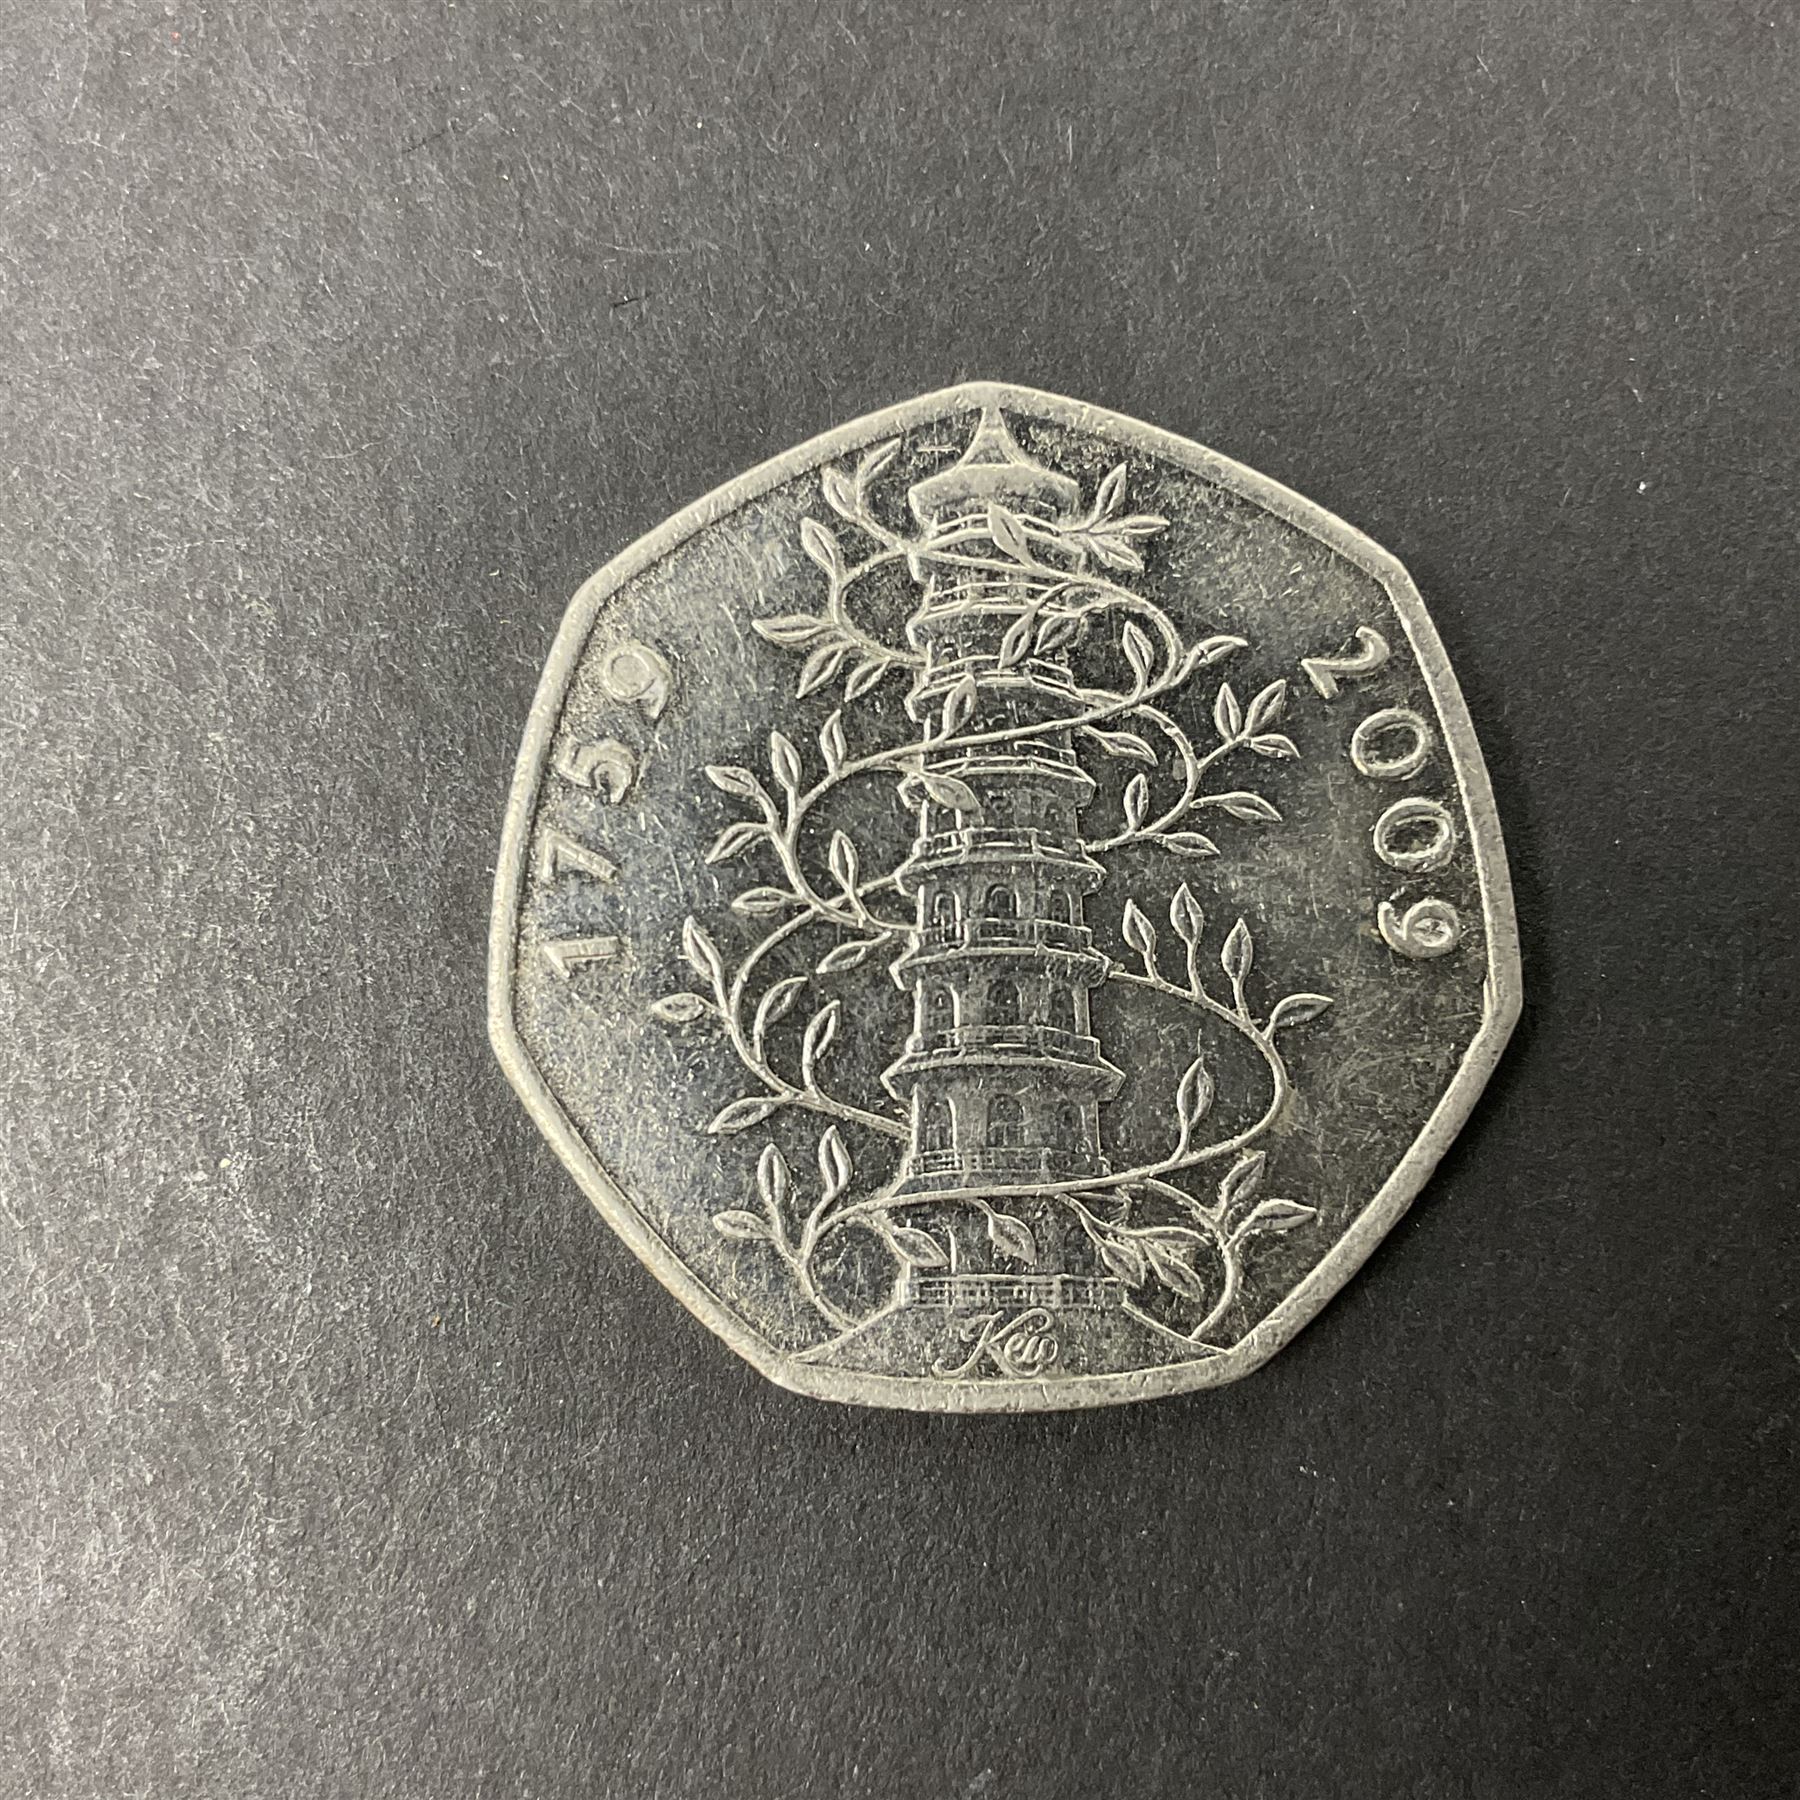 Queen Elizabeth II United Kingdom 2009 Kew Gardens fifty pence coin - Image 2 of 3